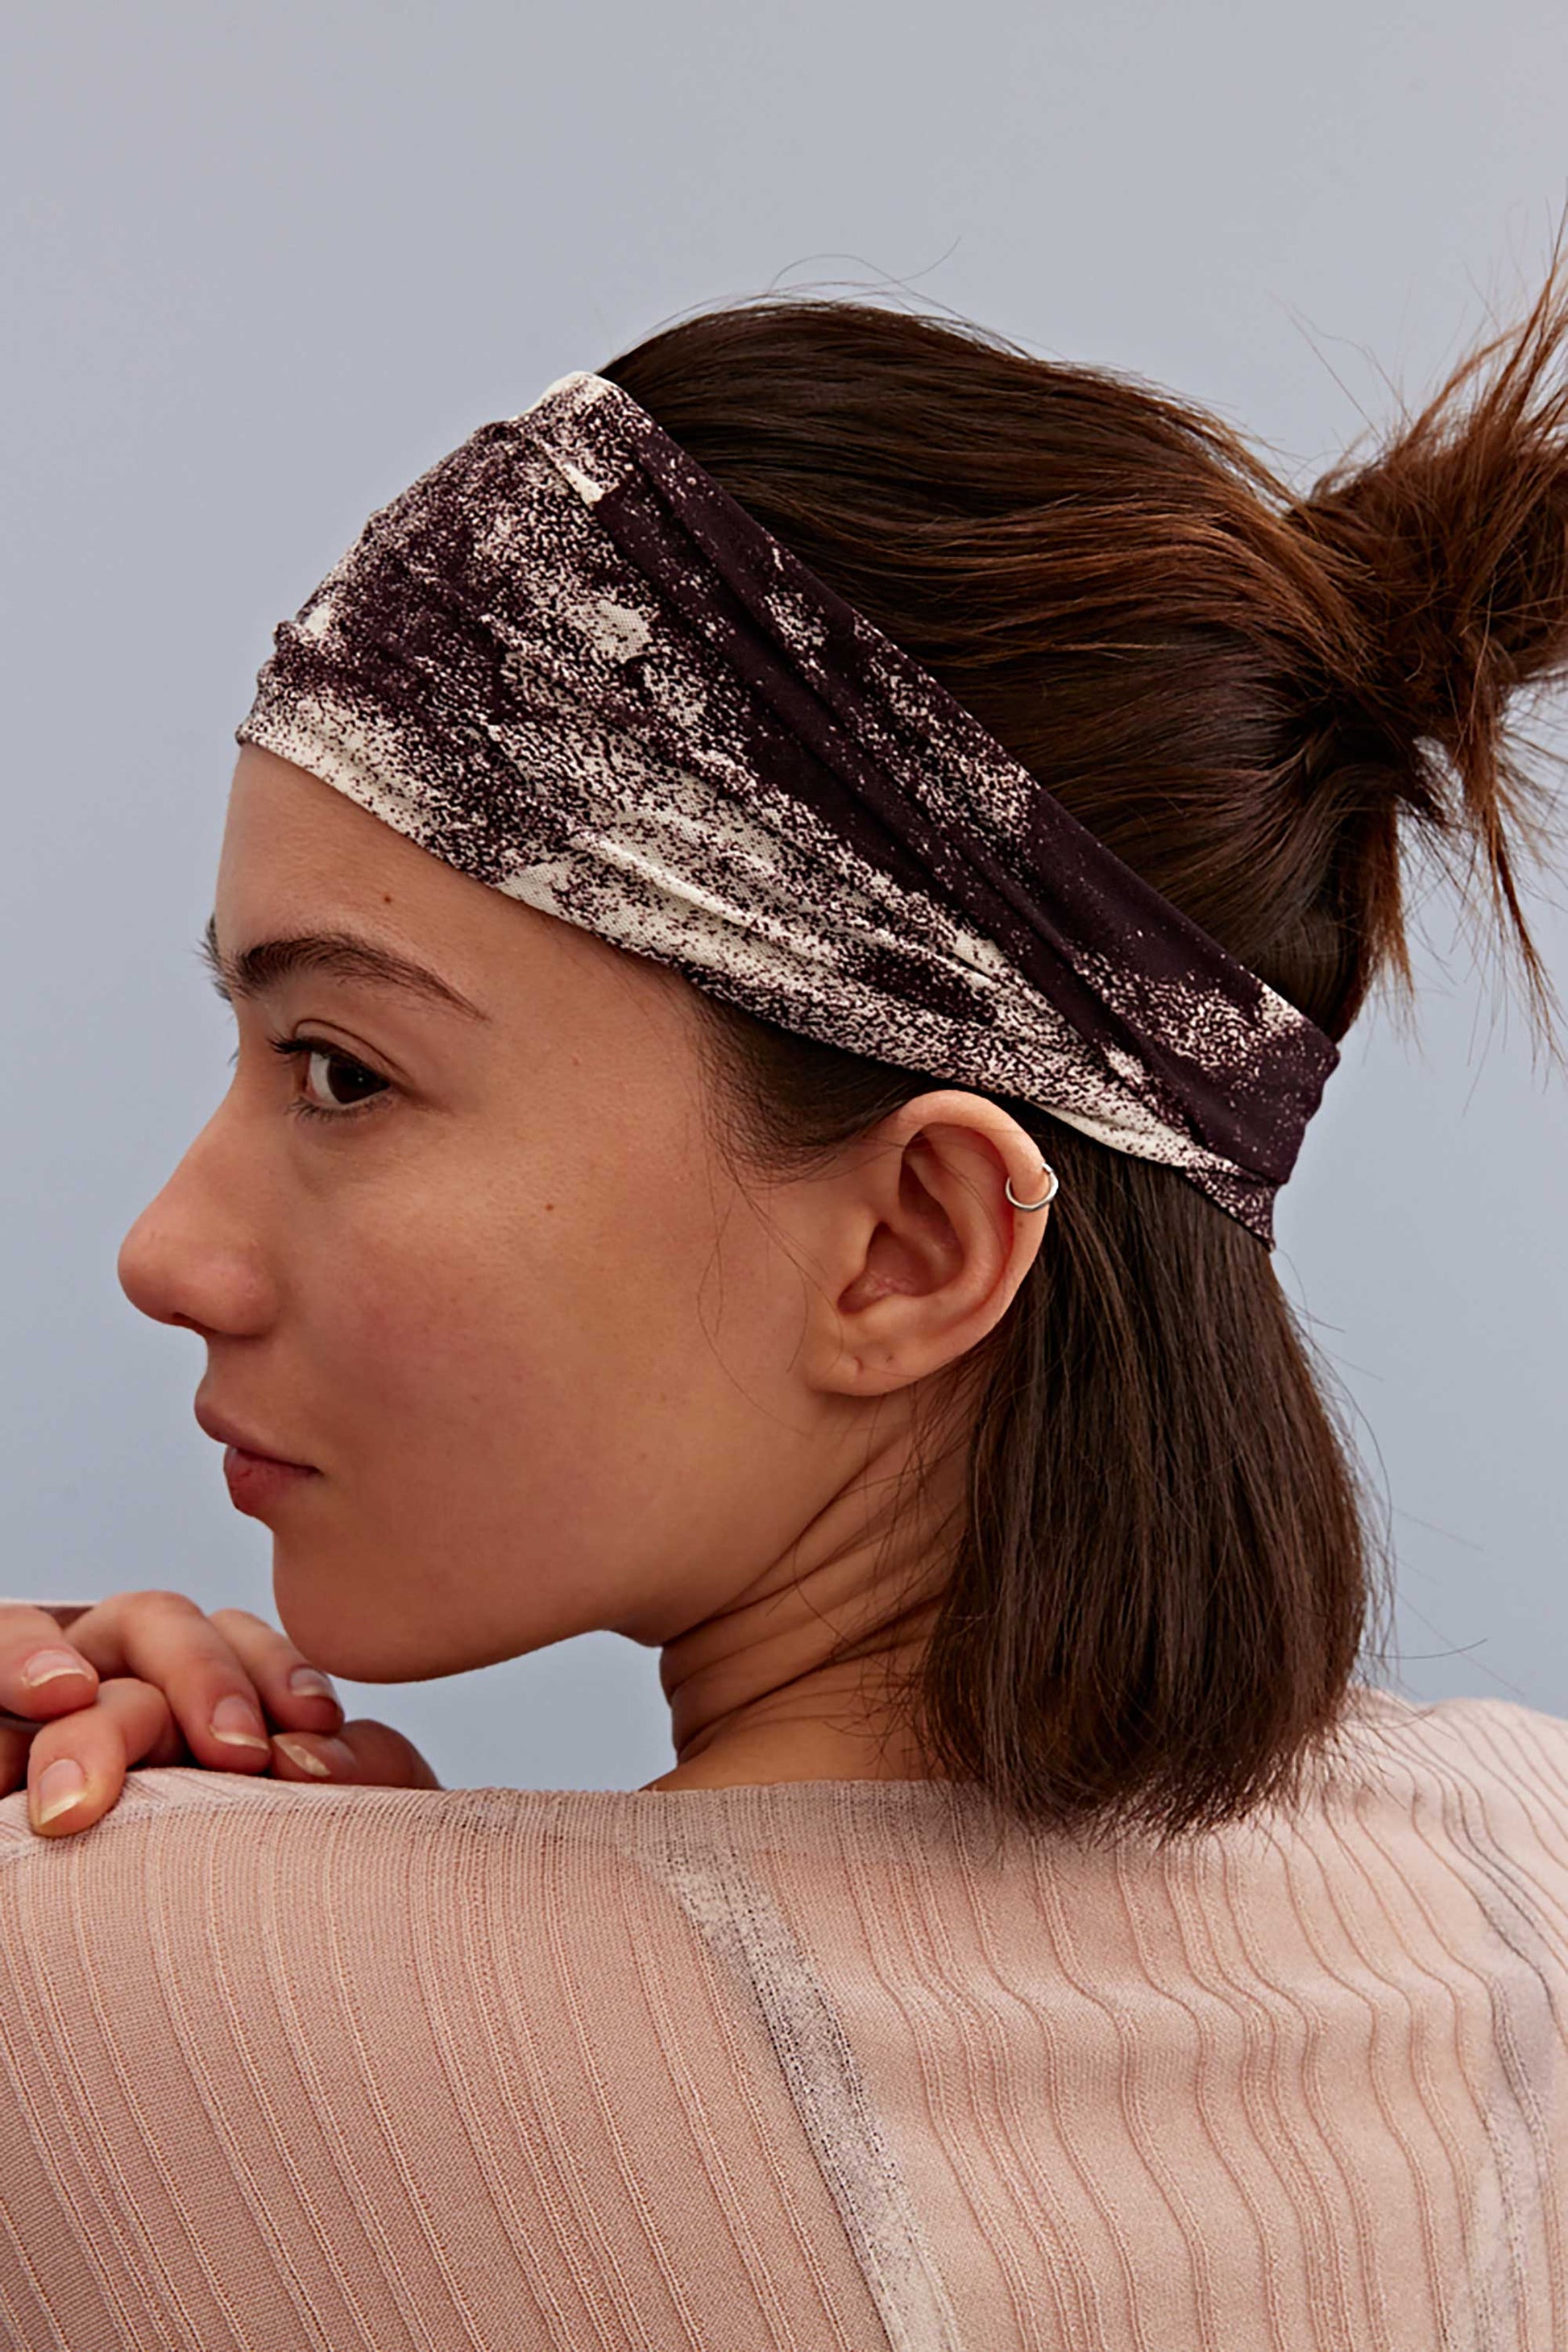 a woman wearing a metallic hairband